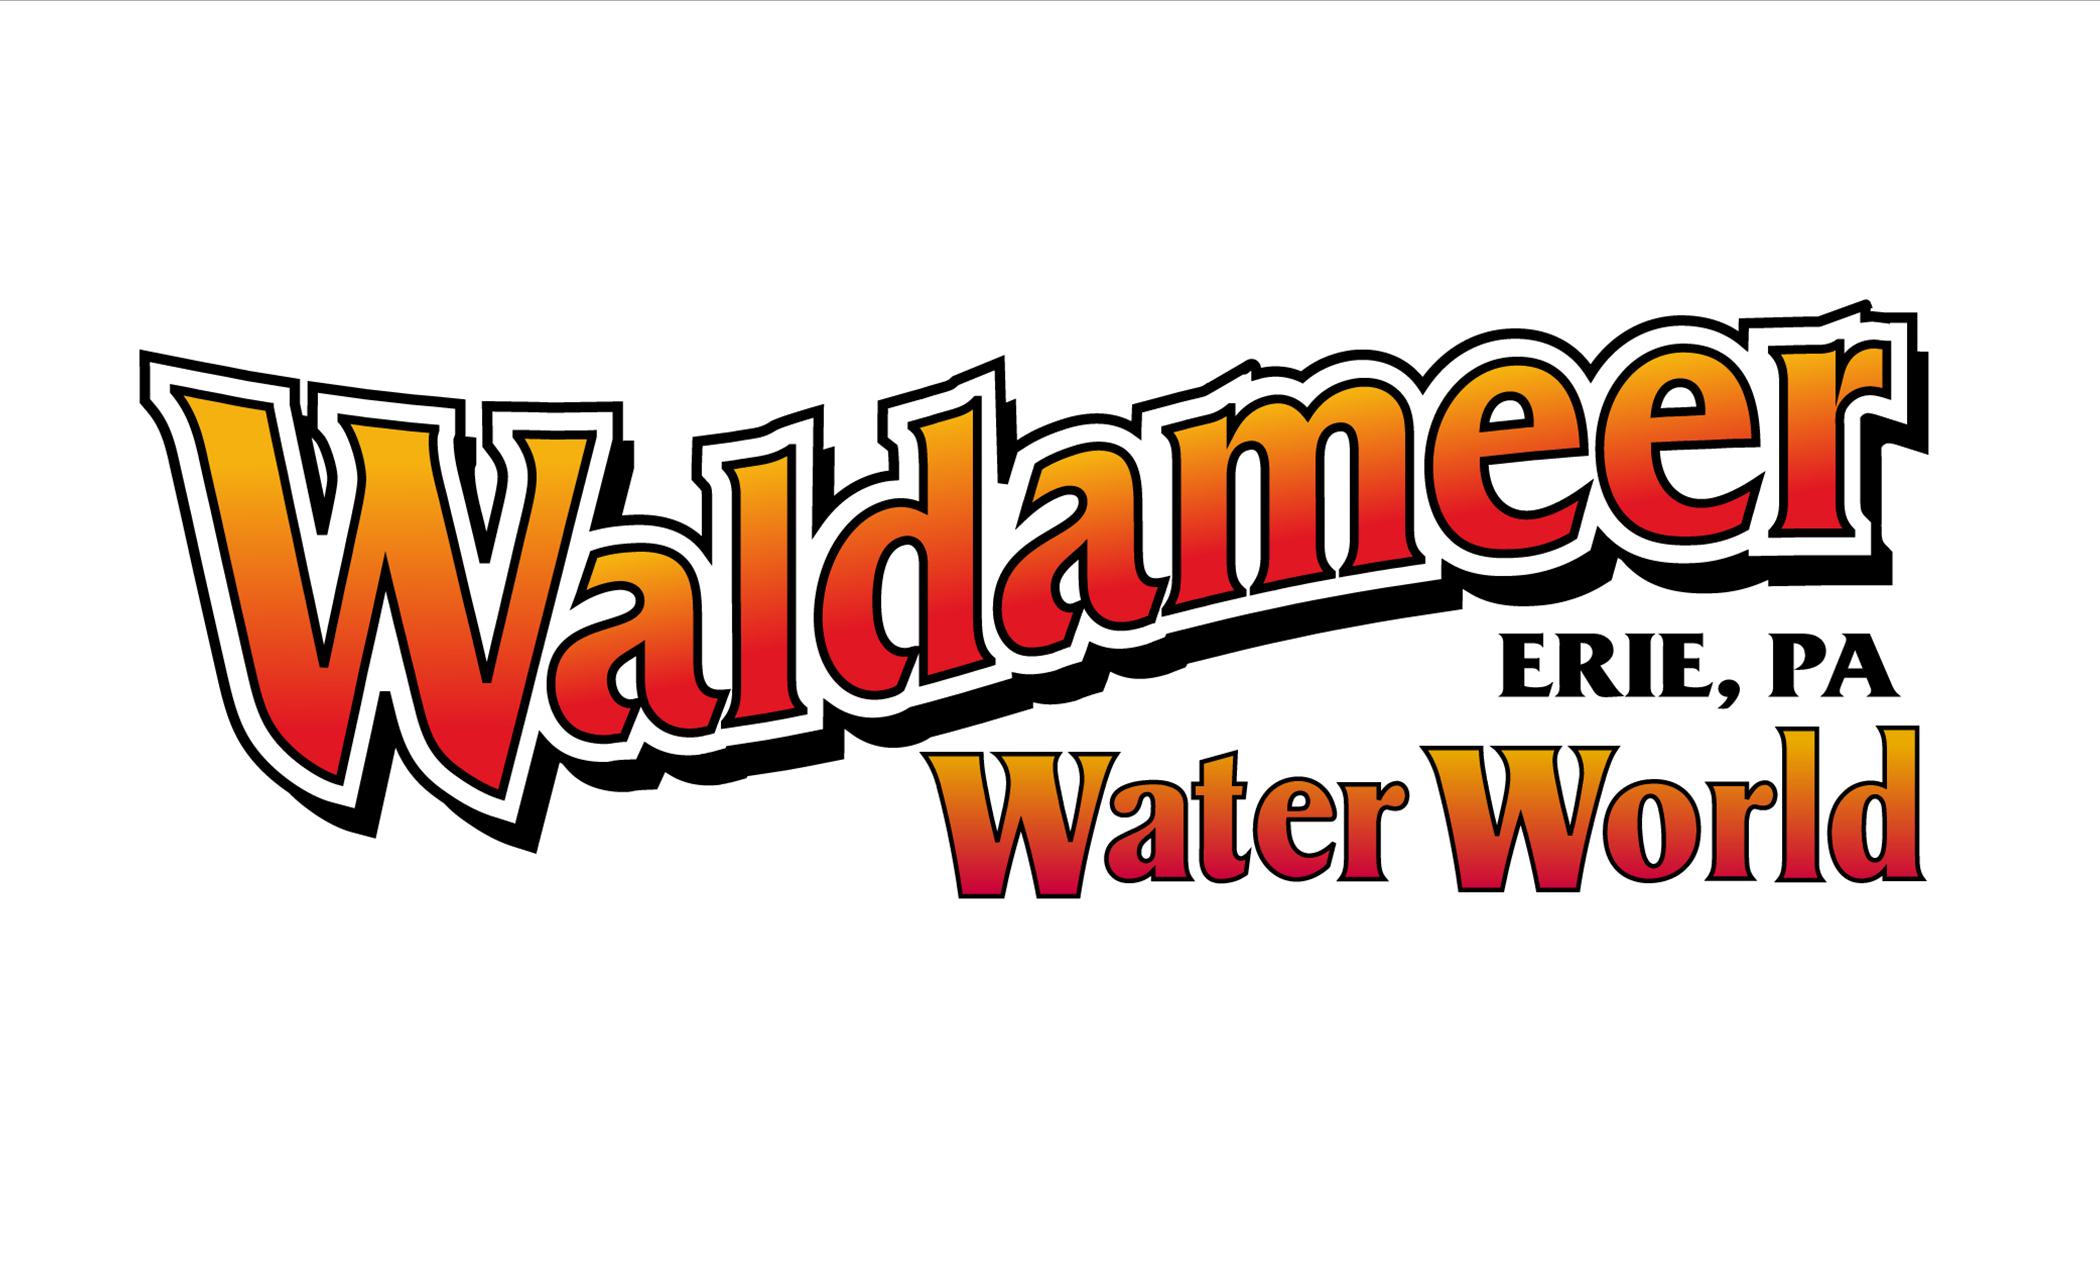 Waldameer and Water World logos